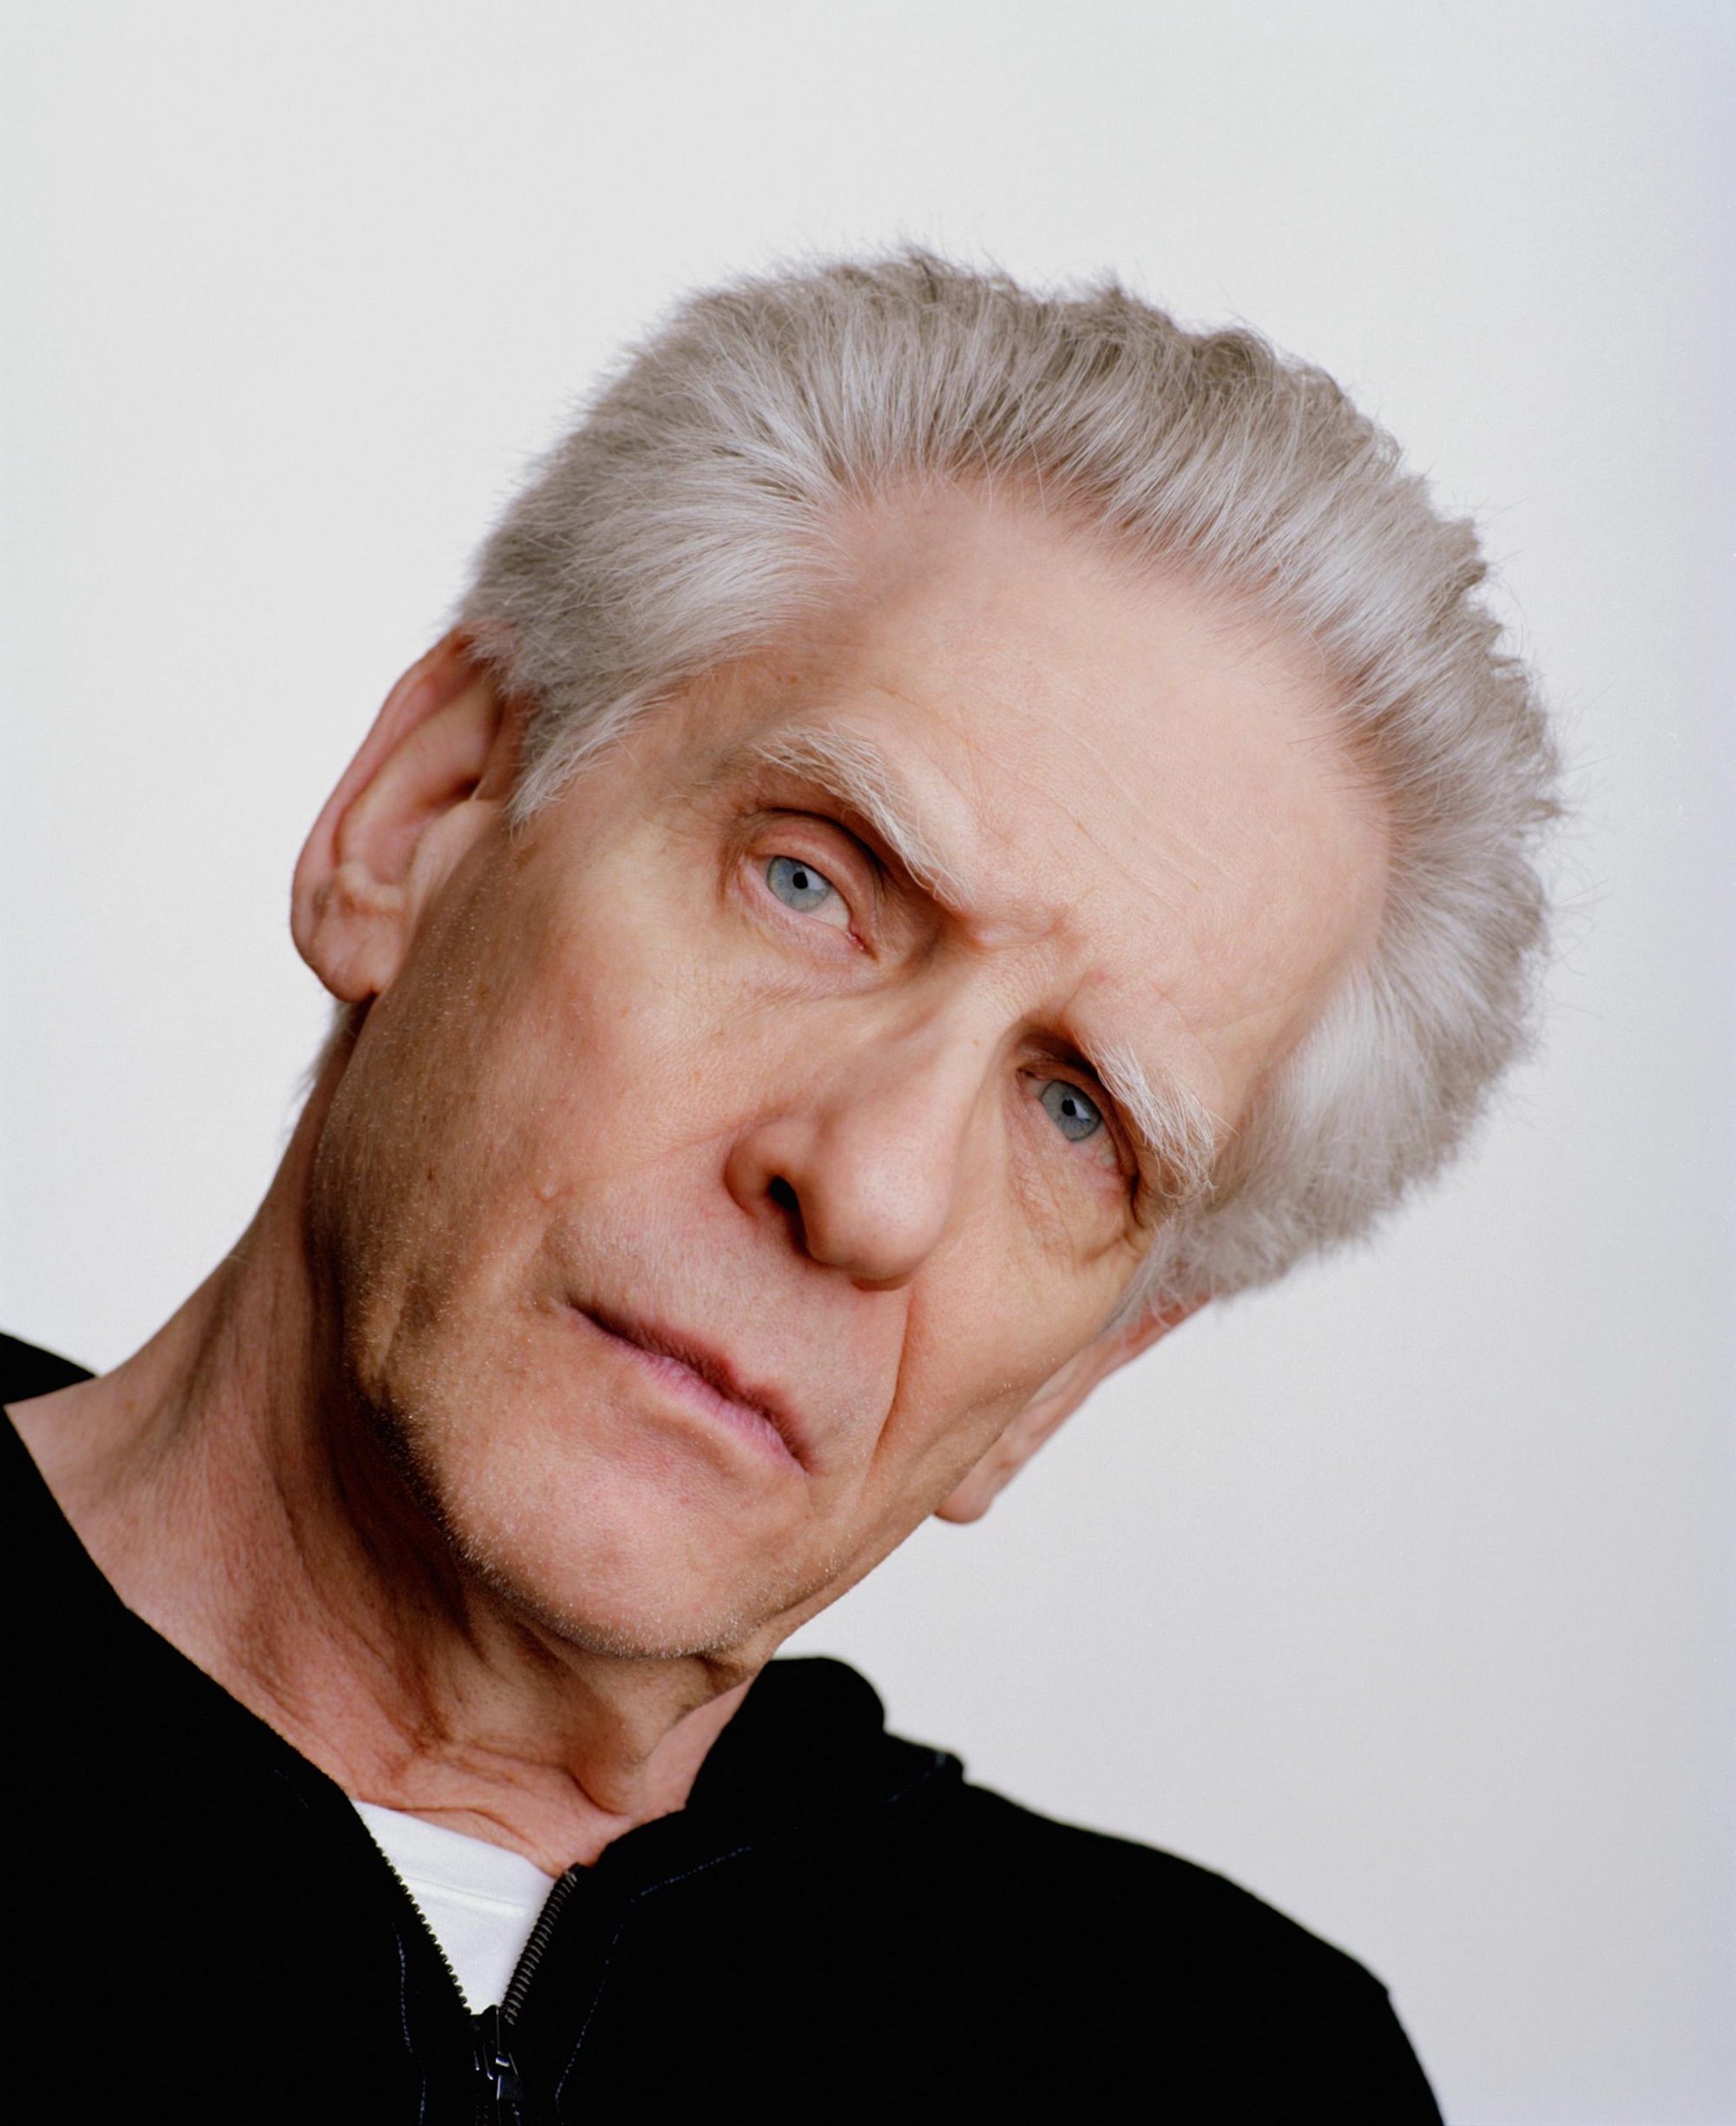 David Cronenberg photographed by Maciek Pozoga